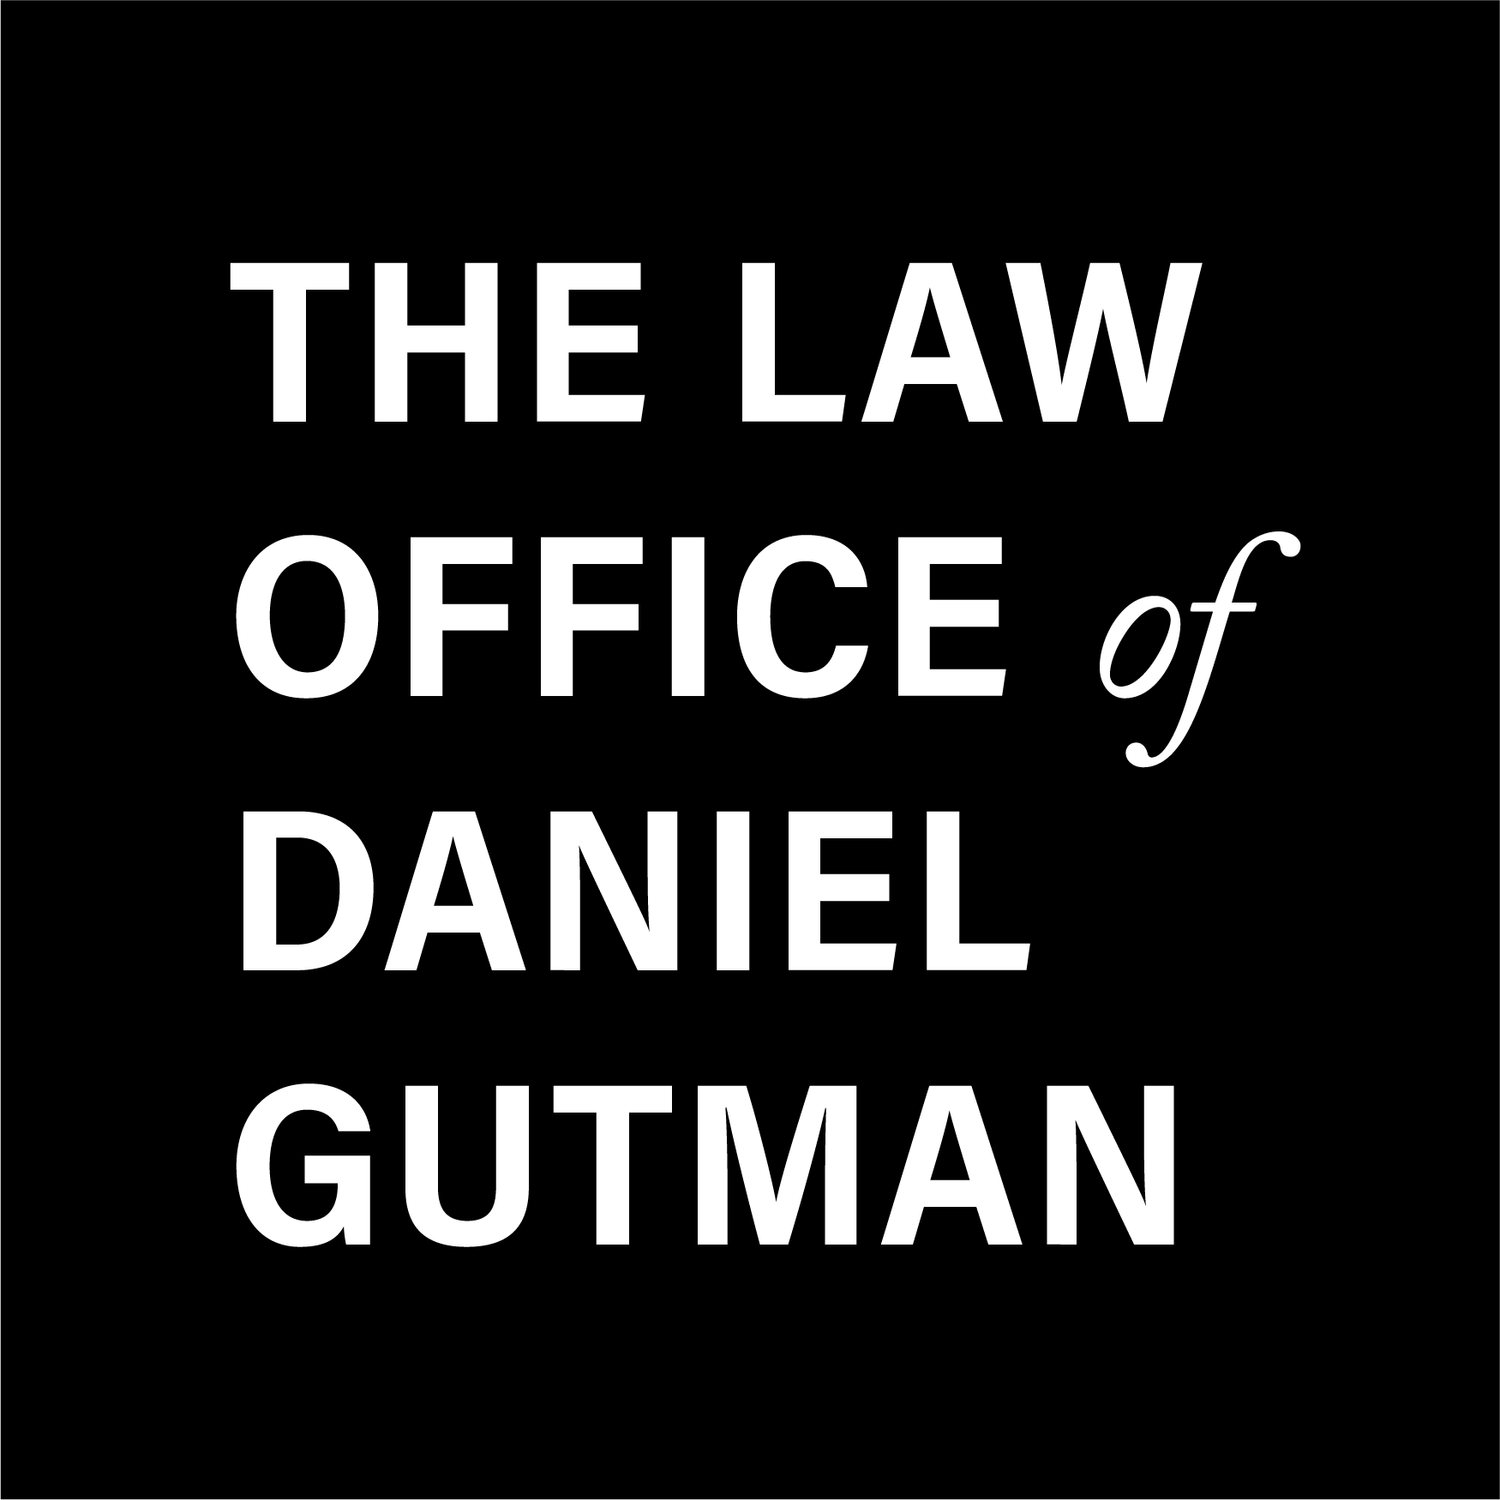 The Law Office of Daniel Gutman